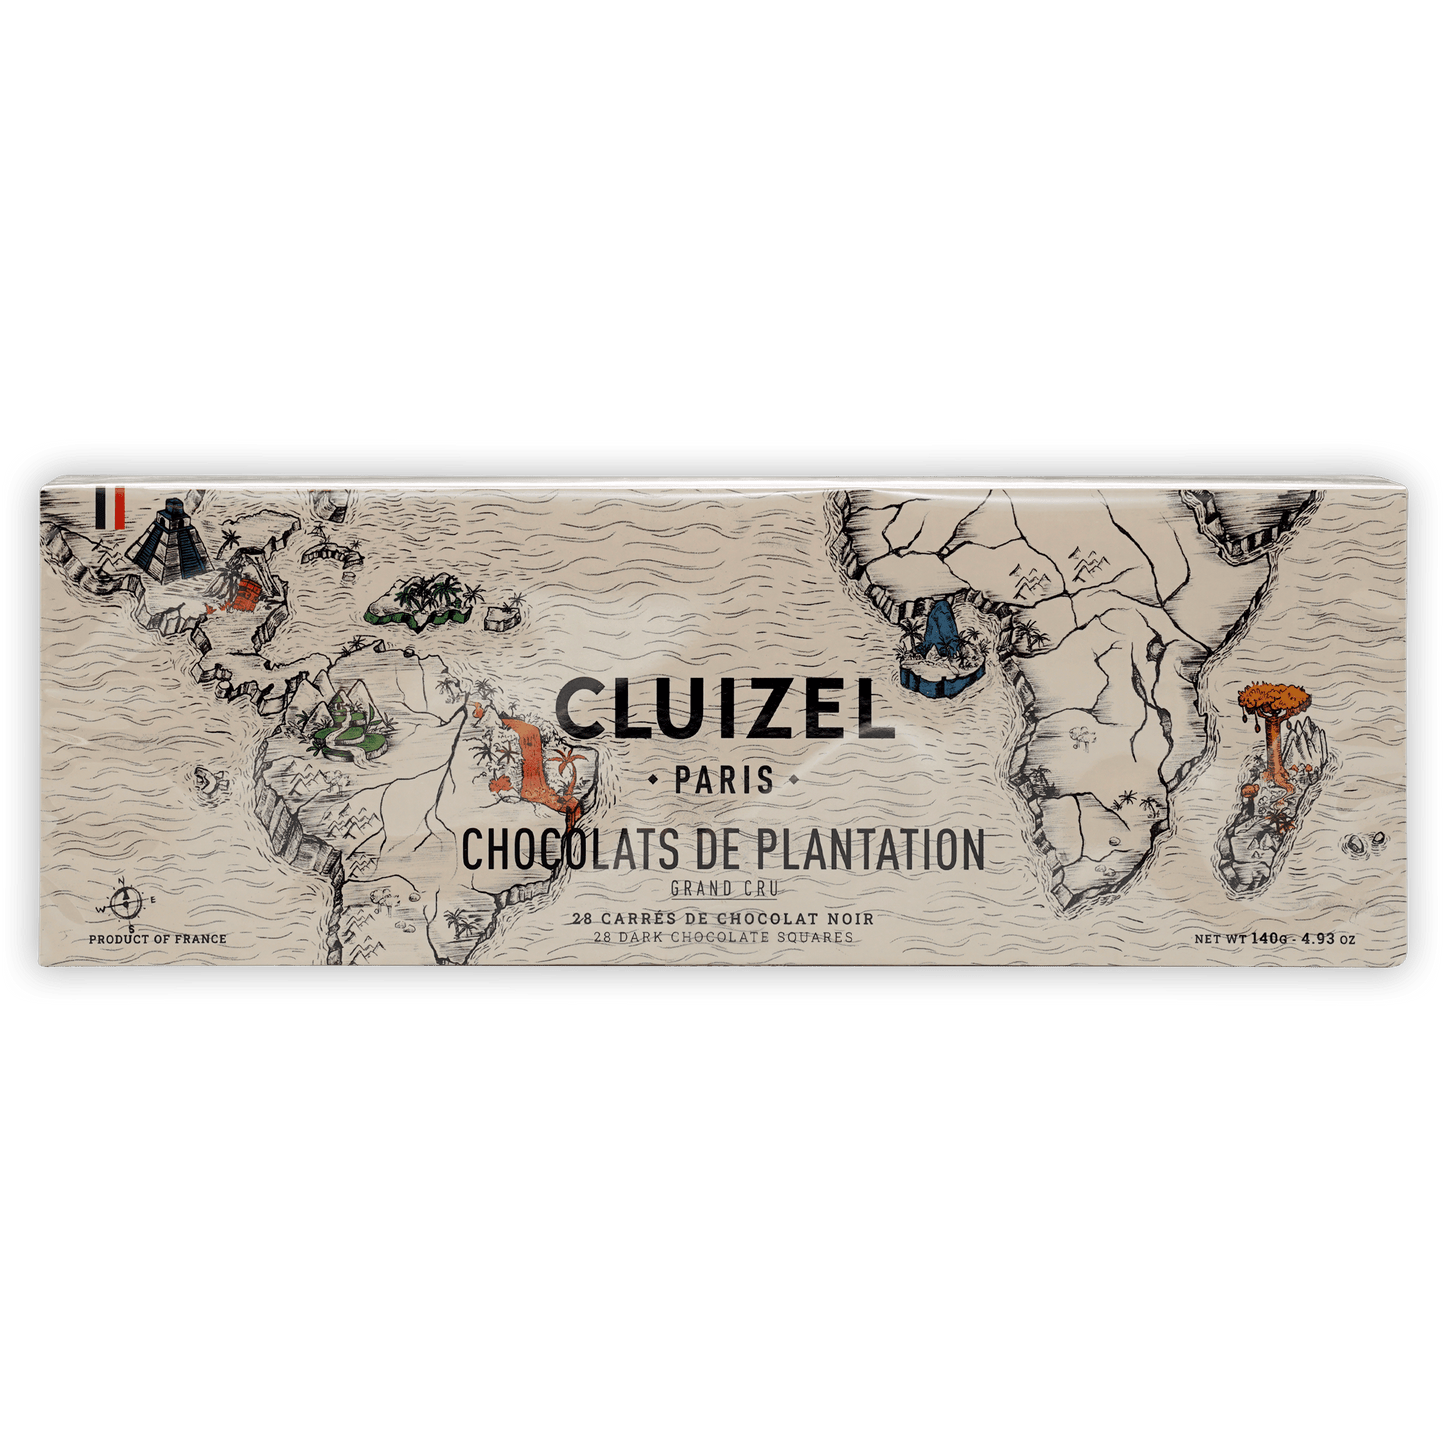 Michel Cluizel Single Estate Tasting Box (28 Pieces)